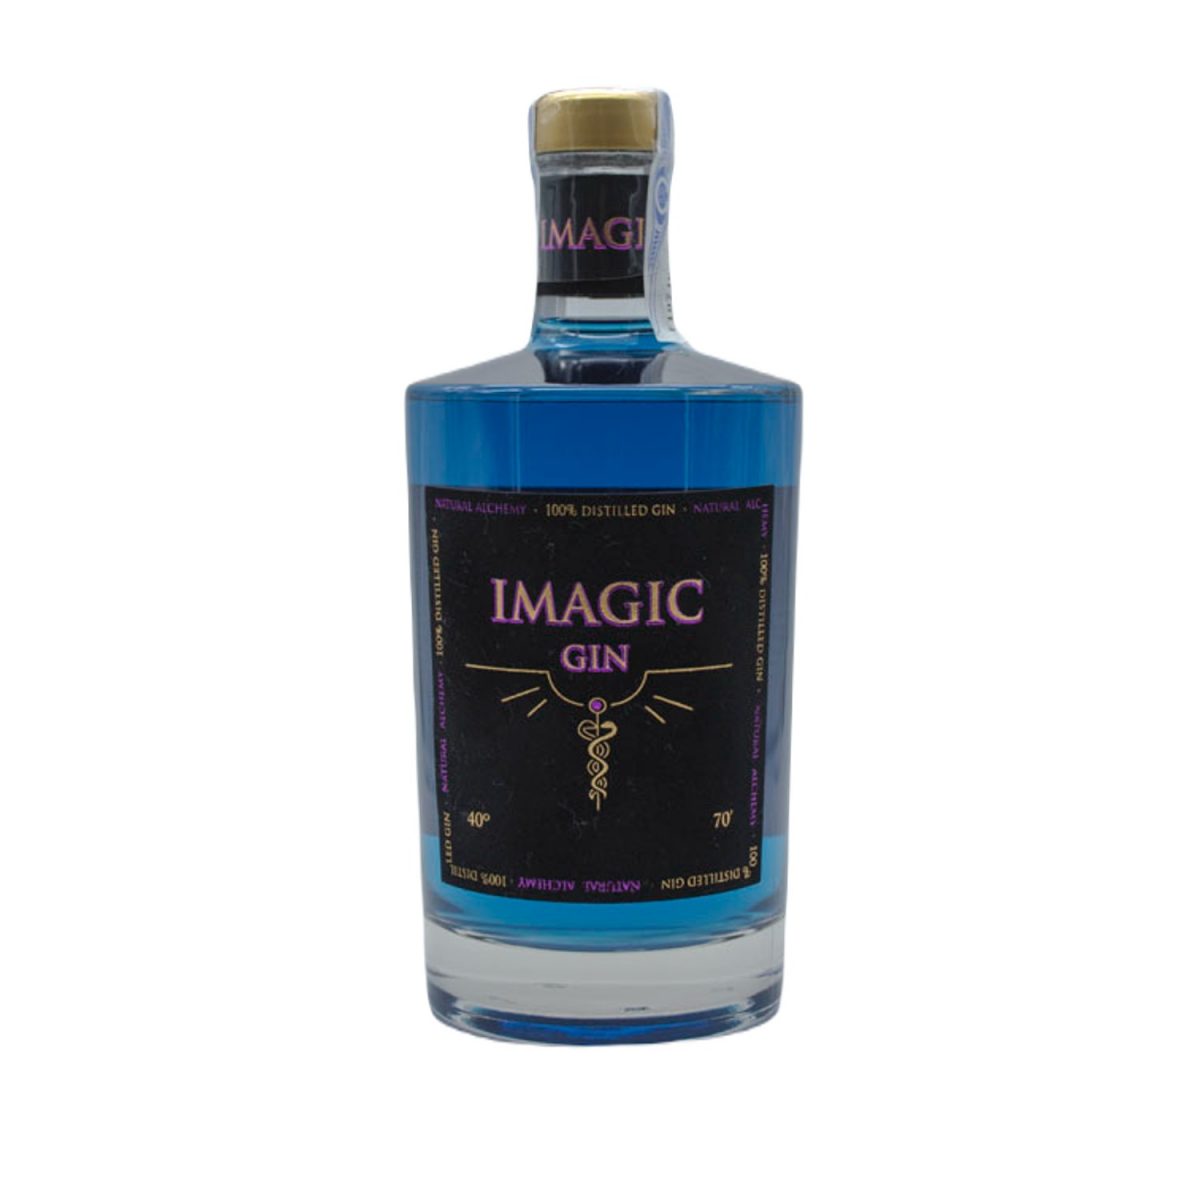 Imagic Gin